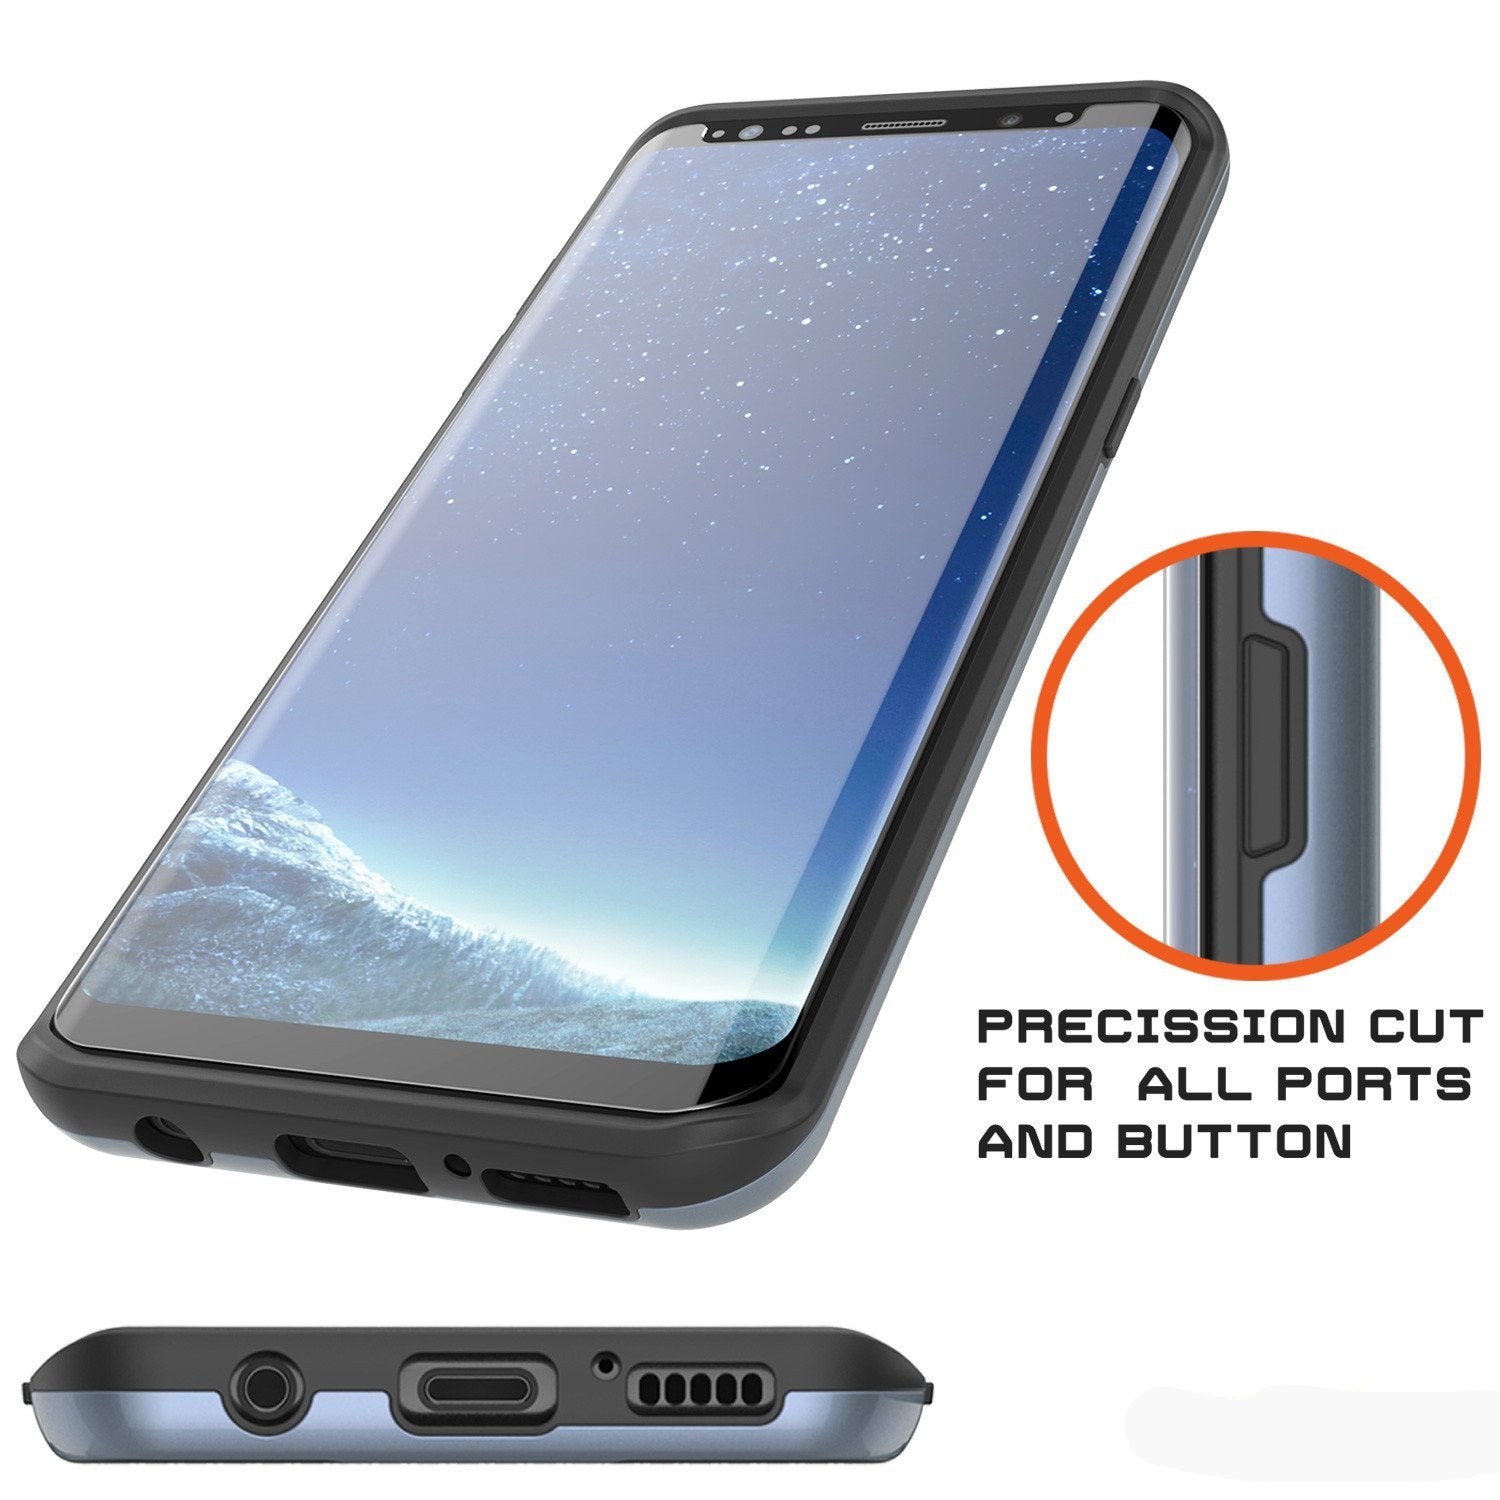 Galaxy S8 Plus Case PunkCase SLOT Navy Series Slim Armor Soft Cover Case